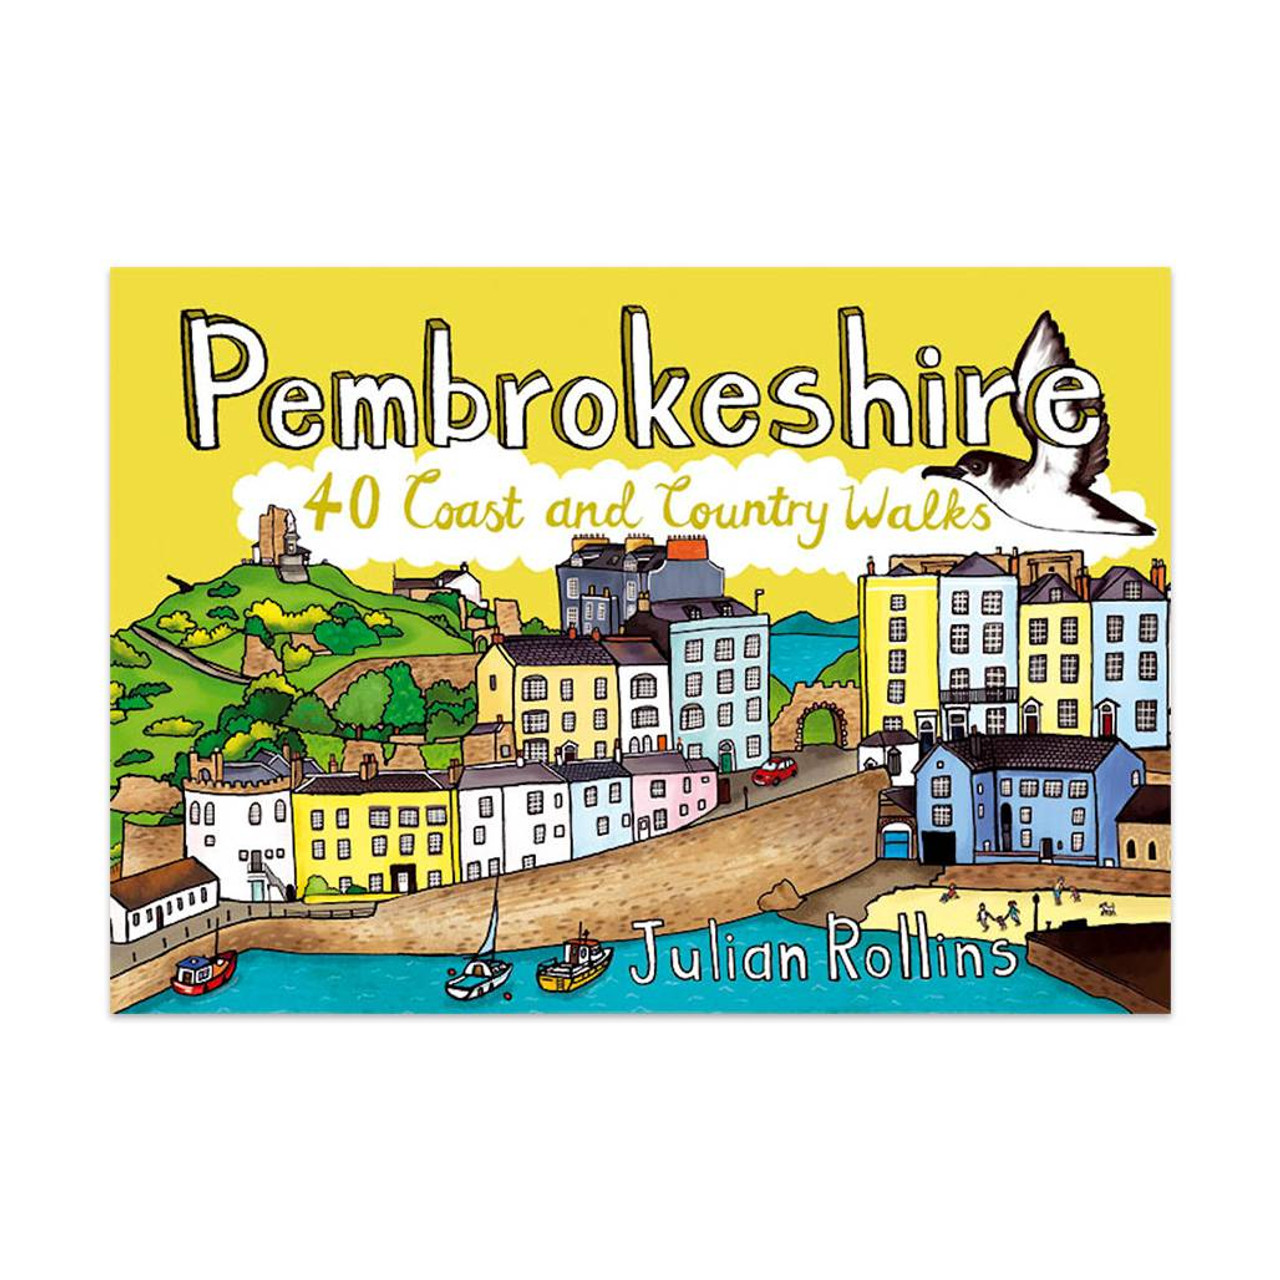 Pembrokeshire: 40 CoastandCountry Walks